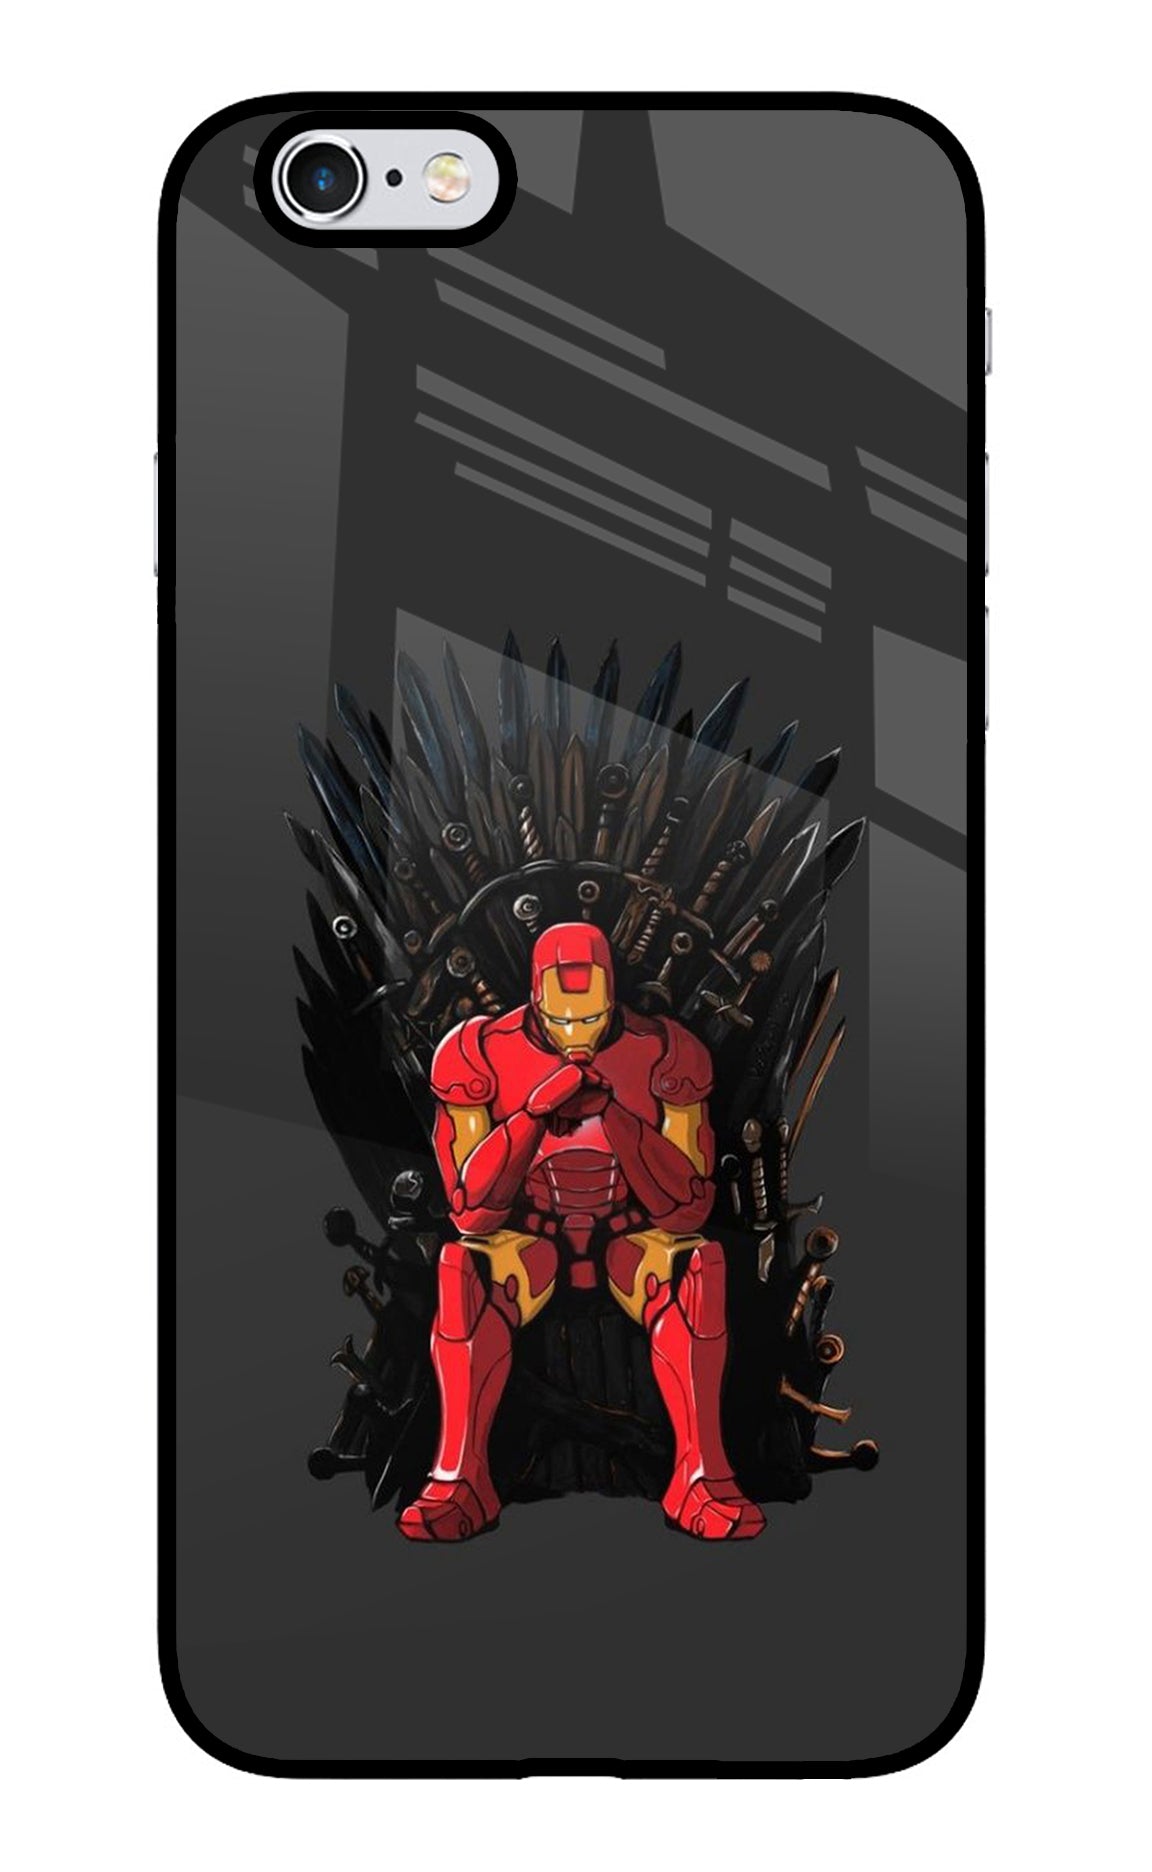 Ironman Throne iPhone 6/6s Glass Case